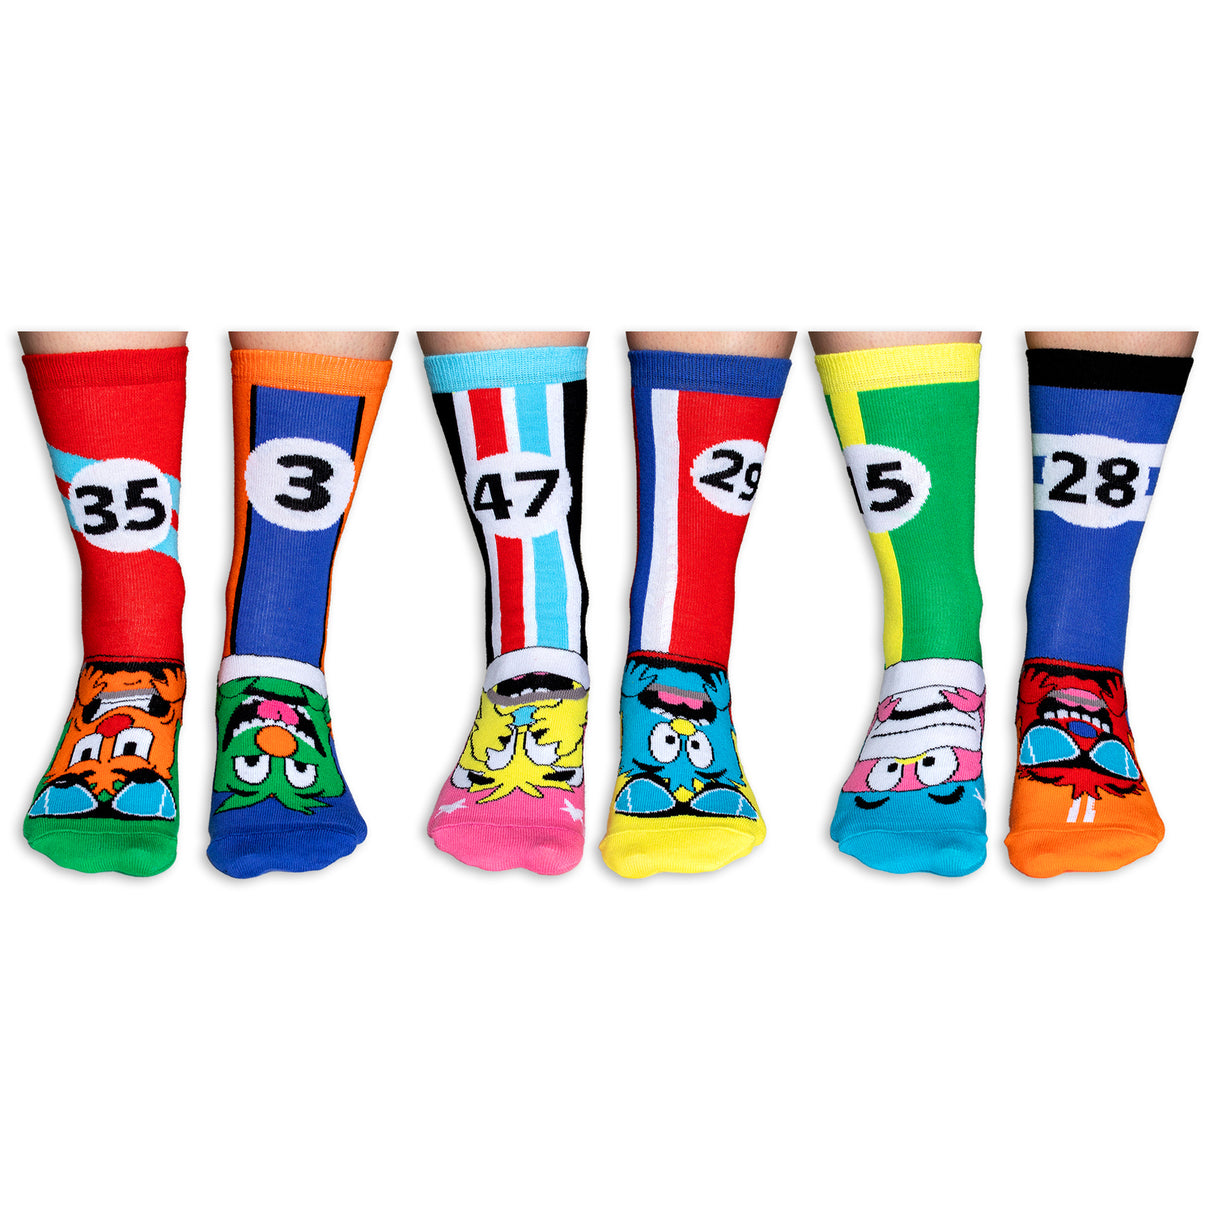 The Zoomers Rennwagen Oddsocks Socken in 30,5-38,5 im 6er Set